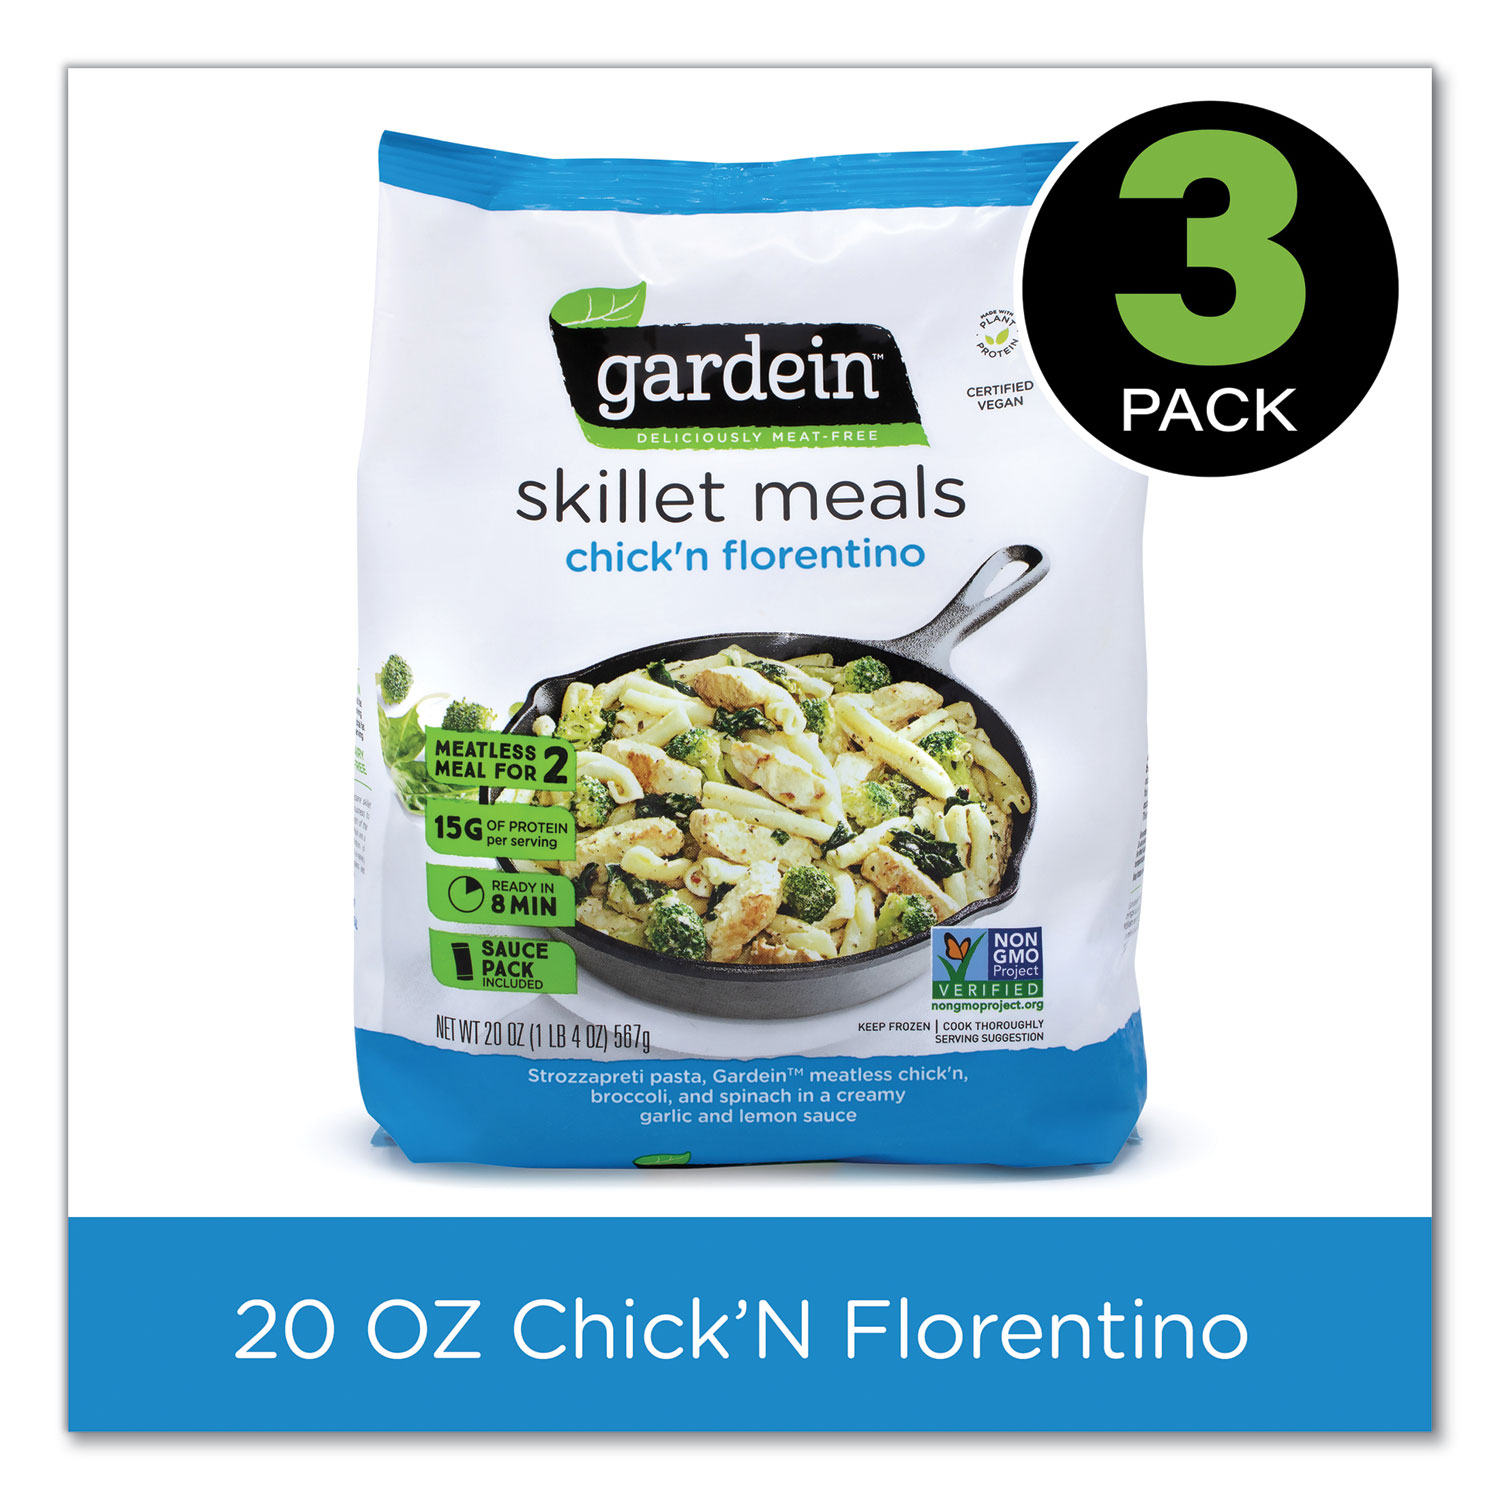  gardein 4223400229 Skillet Meal Chicken Florentine, 20 oz Bag, 3/Pack, Free Delivery in 1-4 Business Days (GRR90300160) 